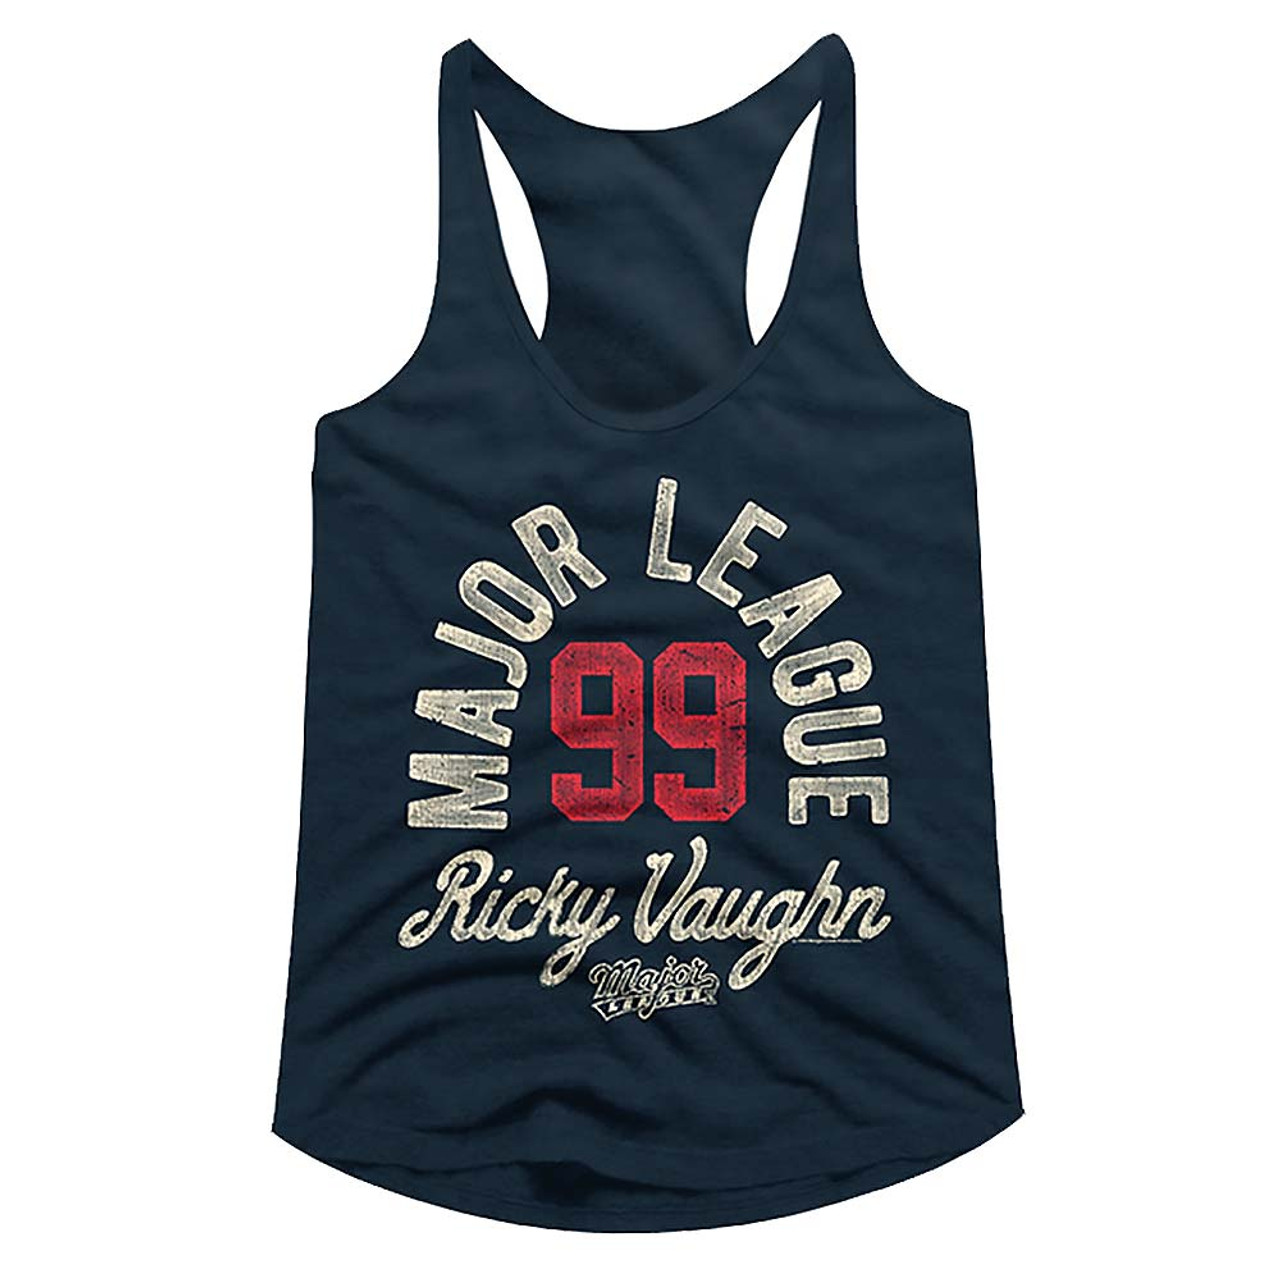 Major League - Womens Ricky Vaughn Racerback Tank Top